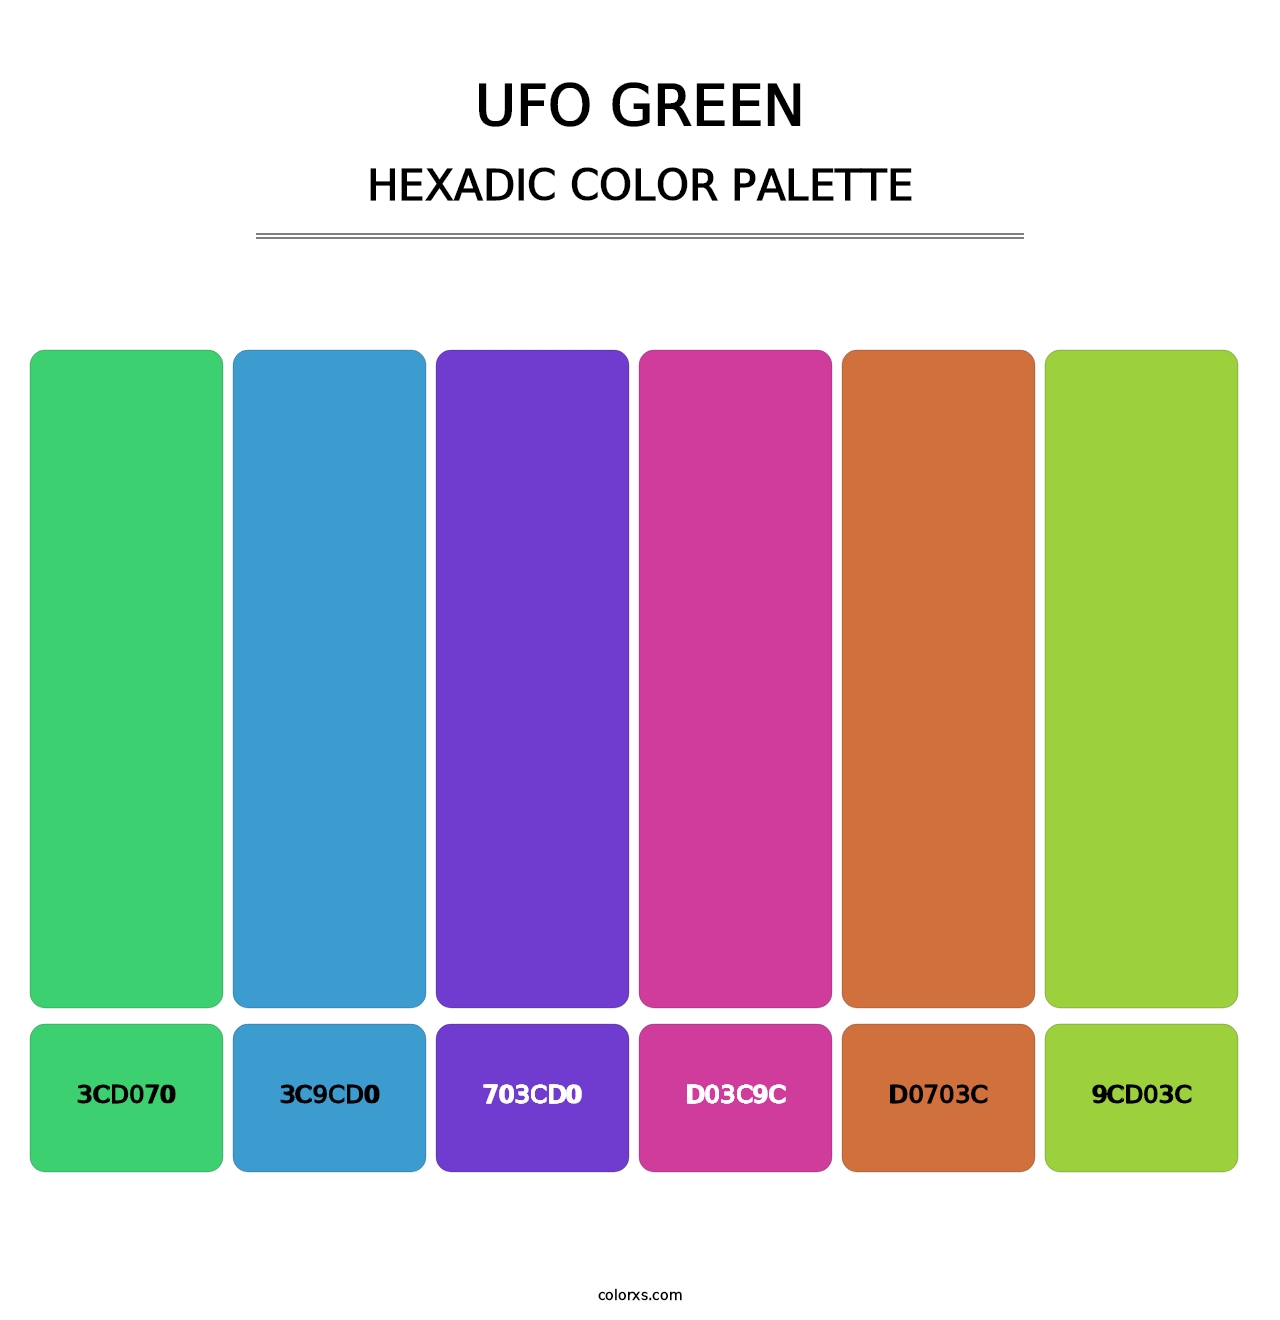 UFO Green - Hexadic Color Palette